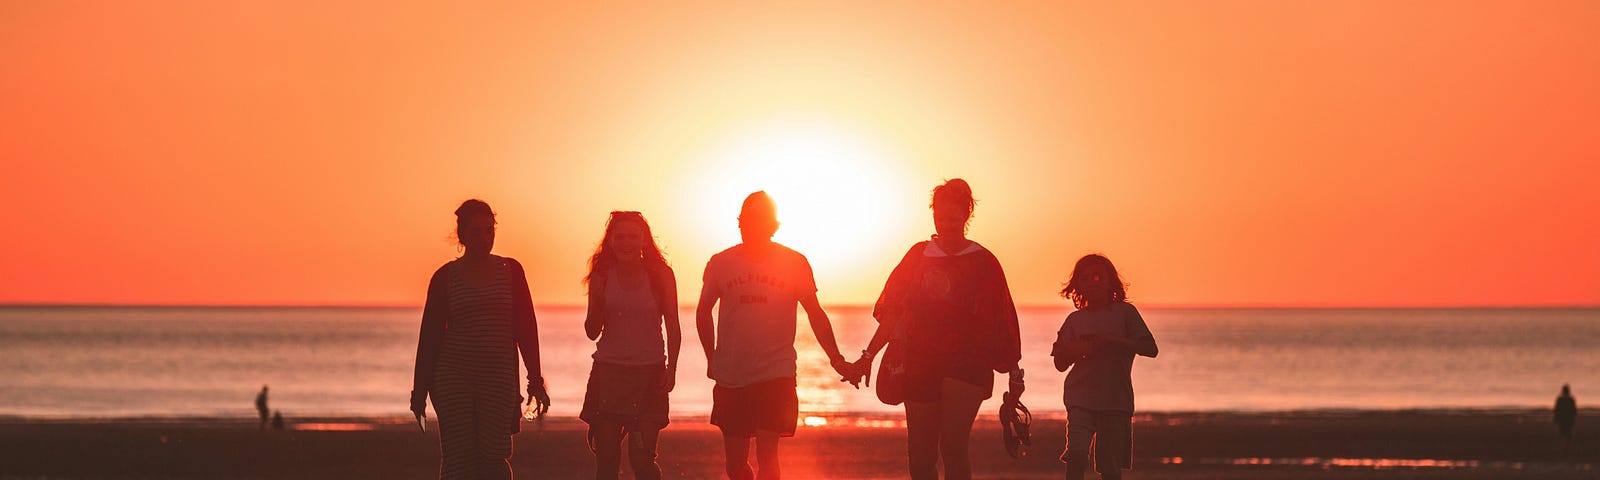 A family of people walk toward an ocean sunset.